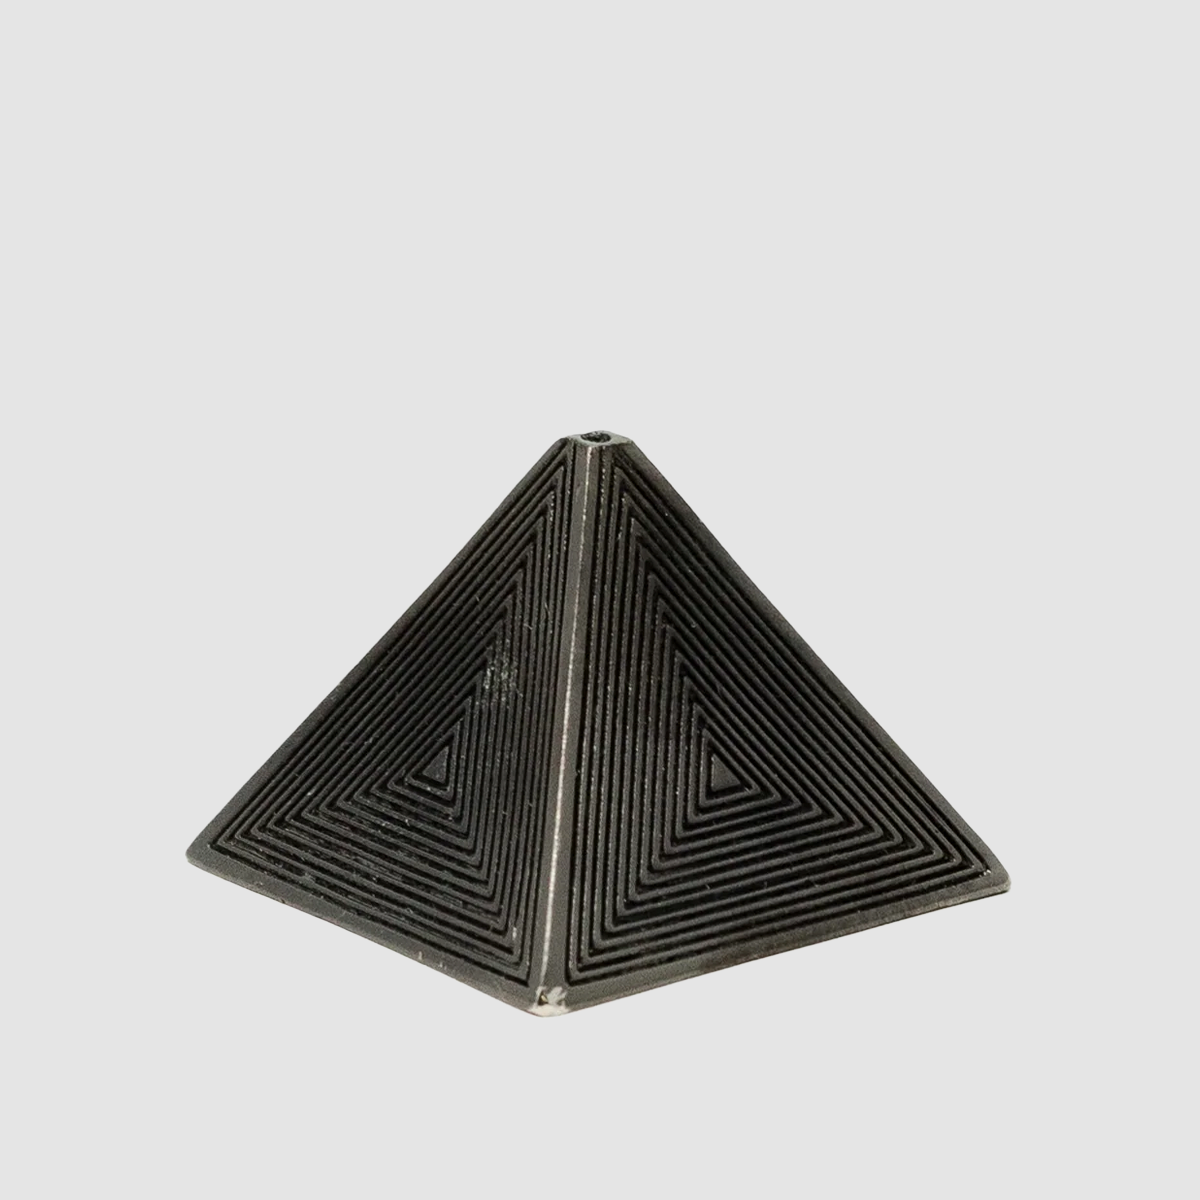 Incense Holder - Metal Black Pyramid